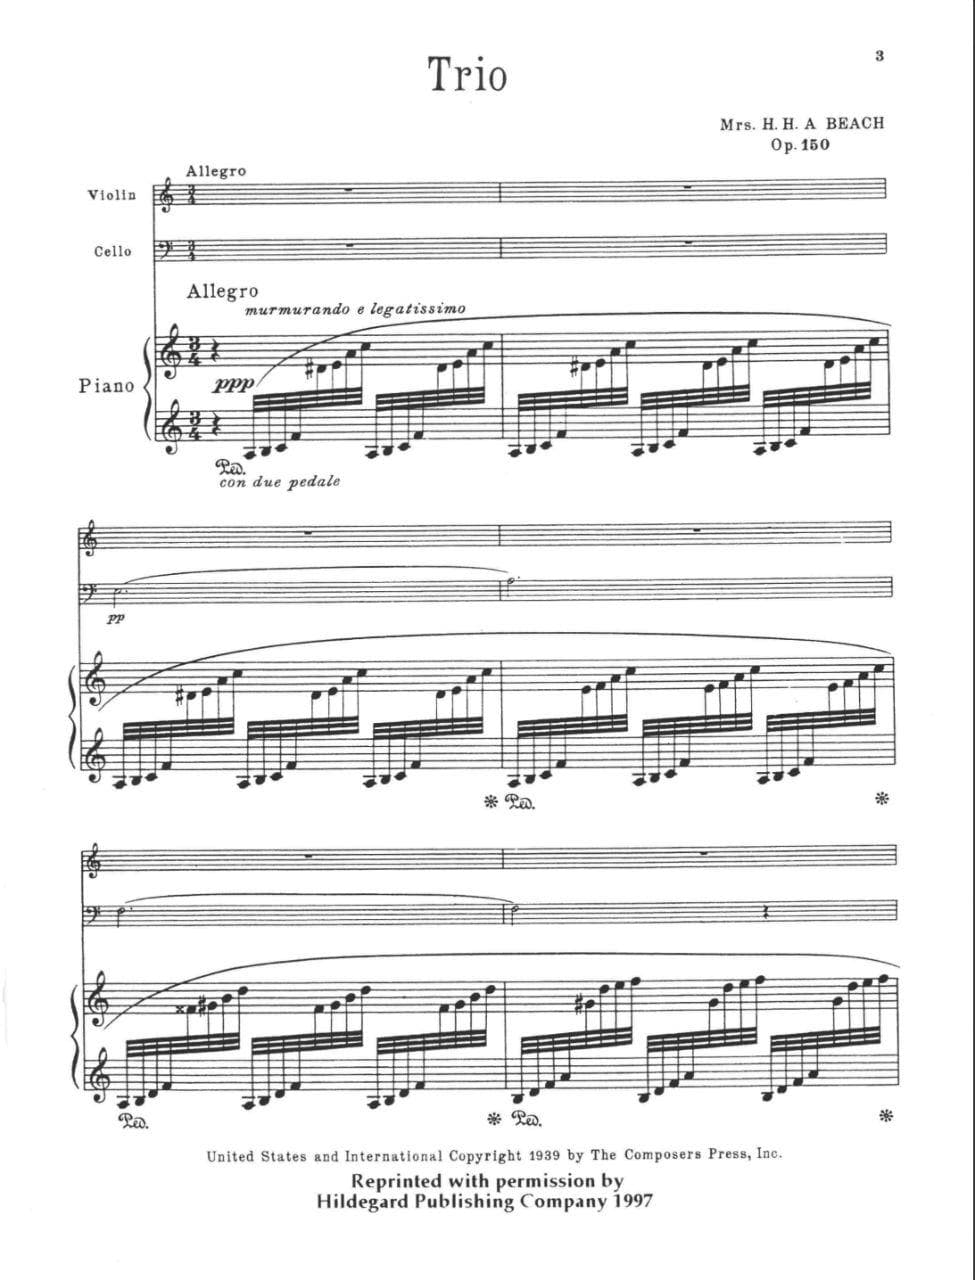 Beach, Amy - Piano Trio Op 150 for Violin, Cello and Piano - Hildegard Publication